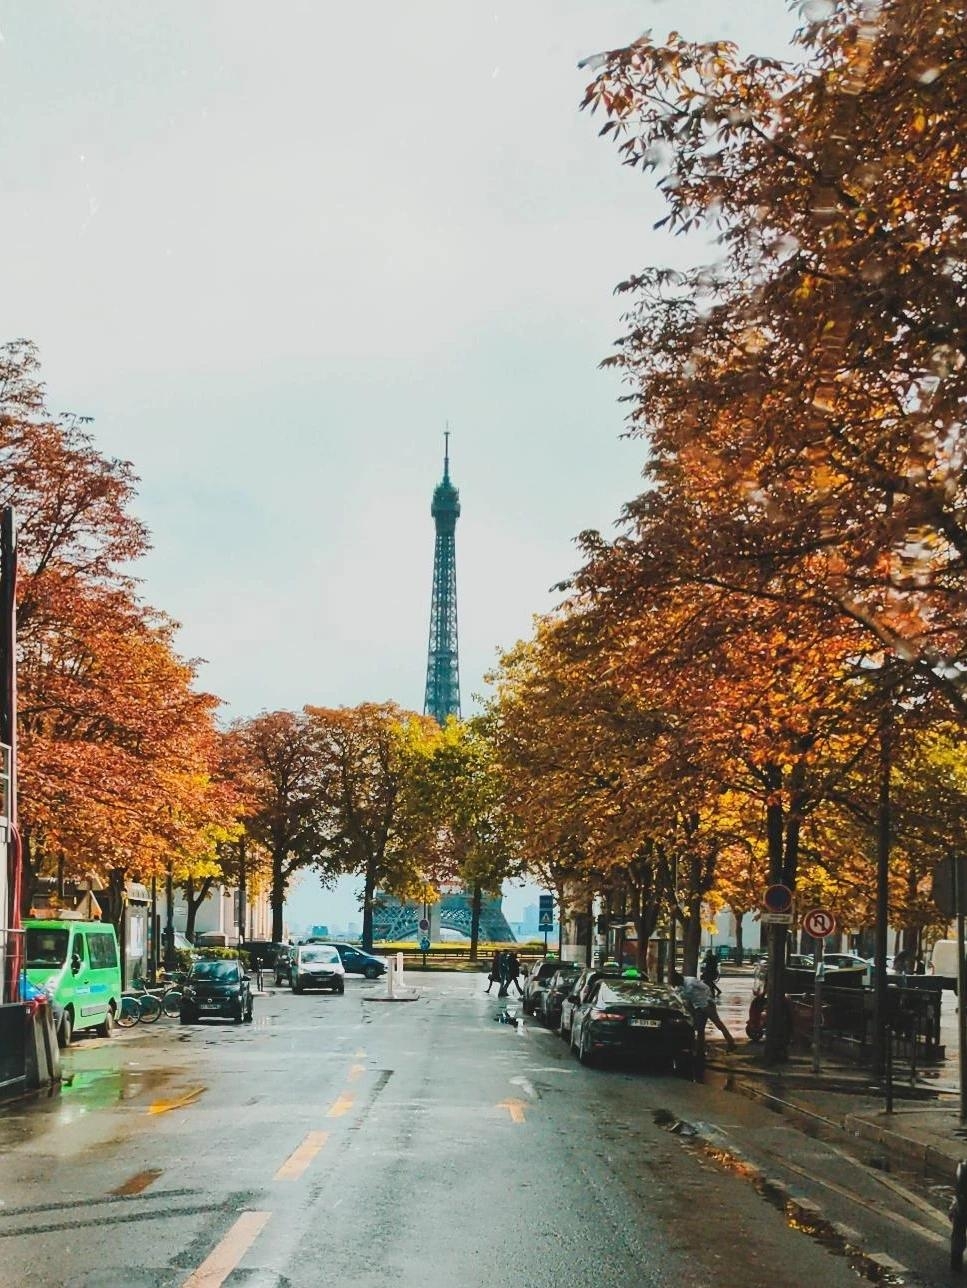 Herbst in Paris 🇫🇷🍁
#herbst #kürbis #urlaub